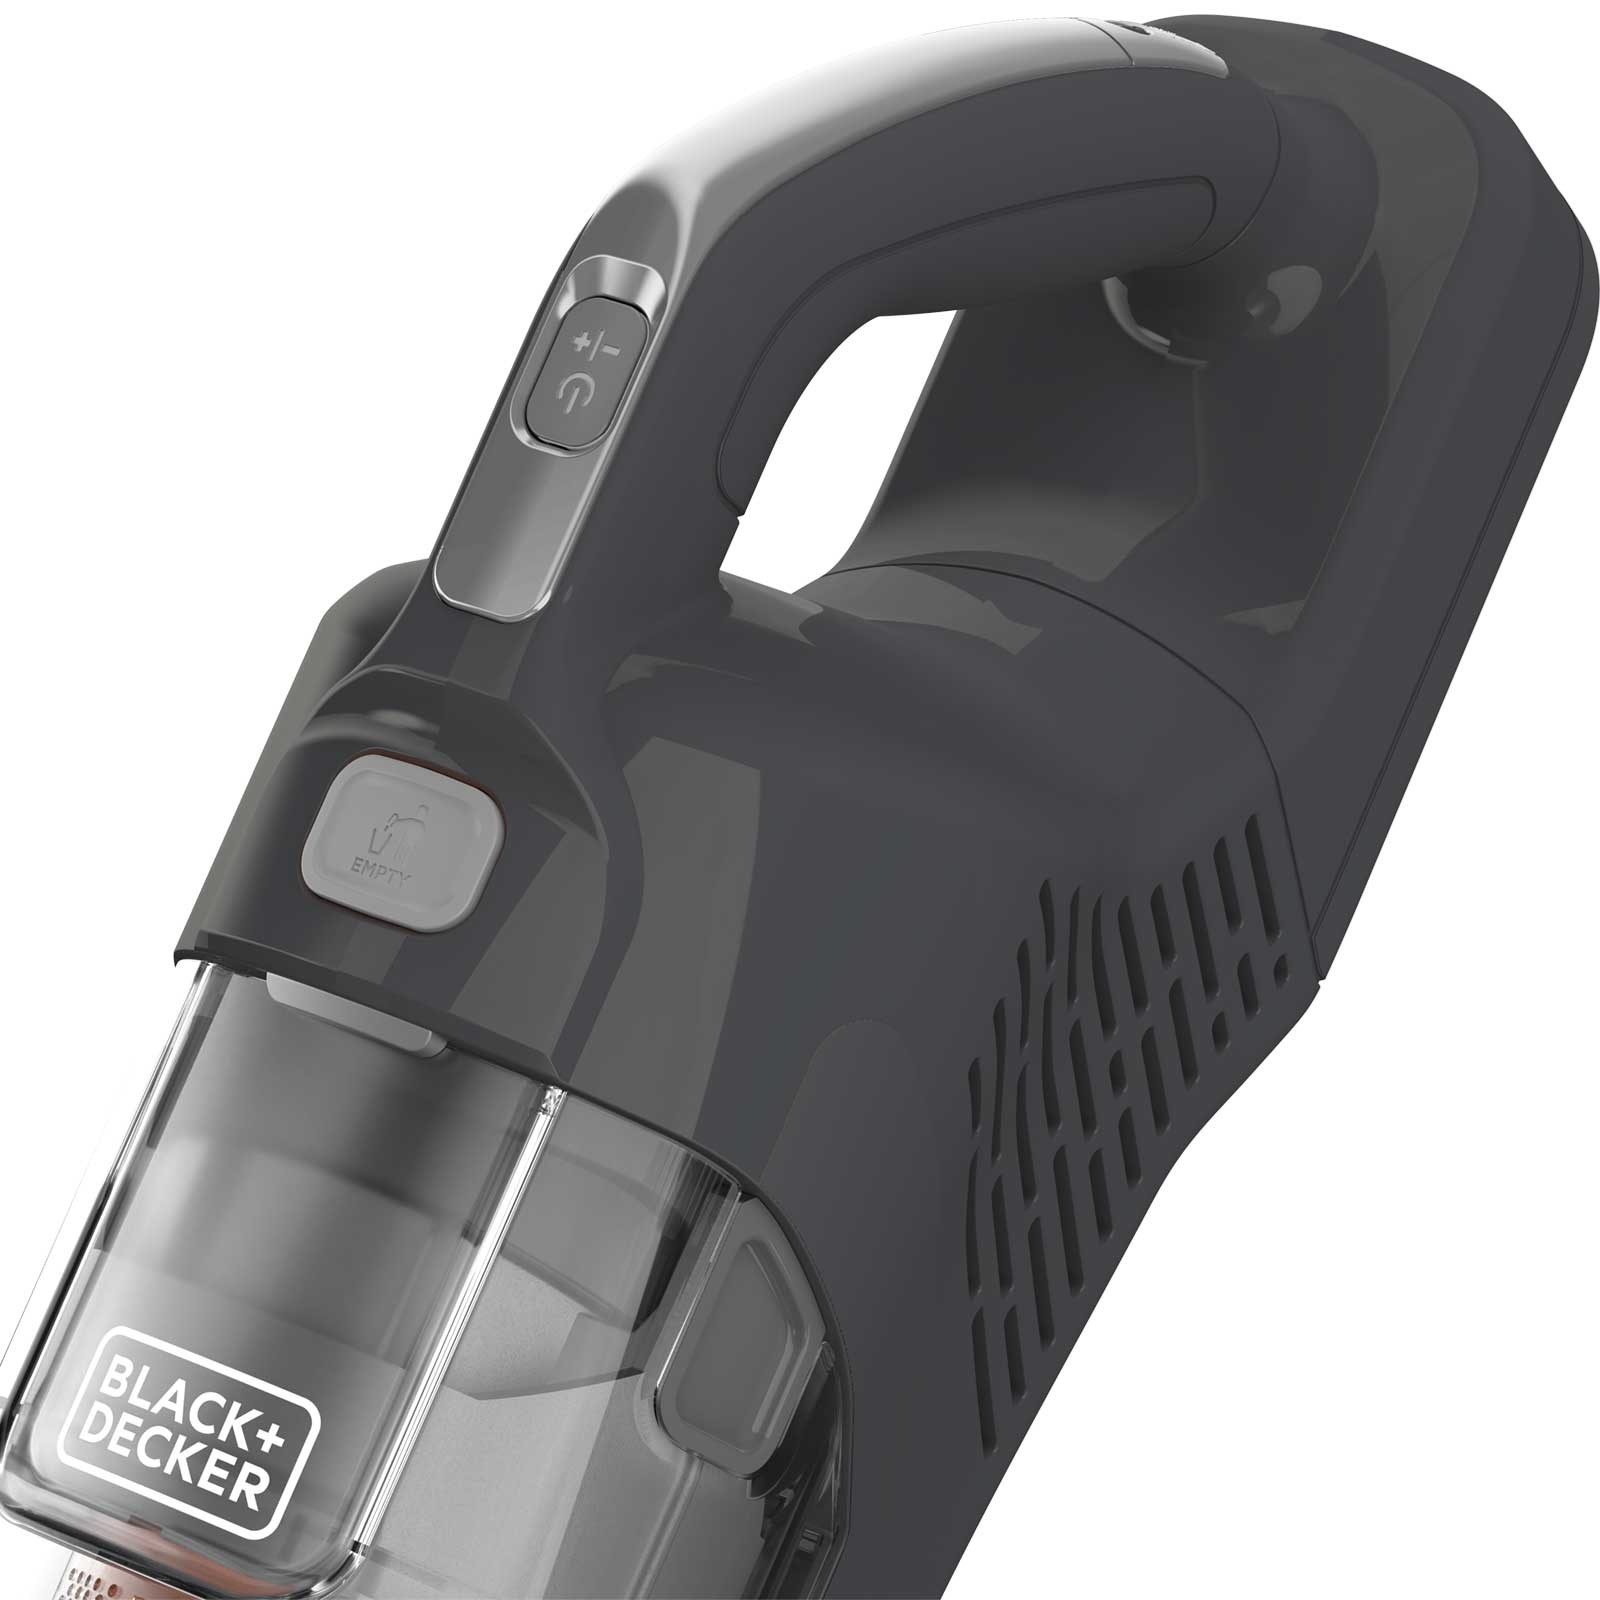 https://www.tooled-up.com/artwork/produsage/BD-BHFEA520J-GB-A2-Black-Decker-18v-Cordless-Powerseries-Stick-Vacuum-Cleaner-Controls.jpg?w=1600&h=1600